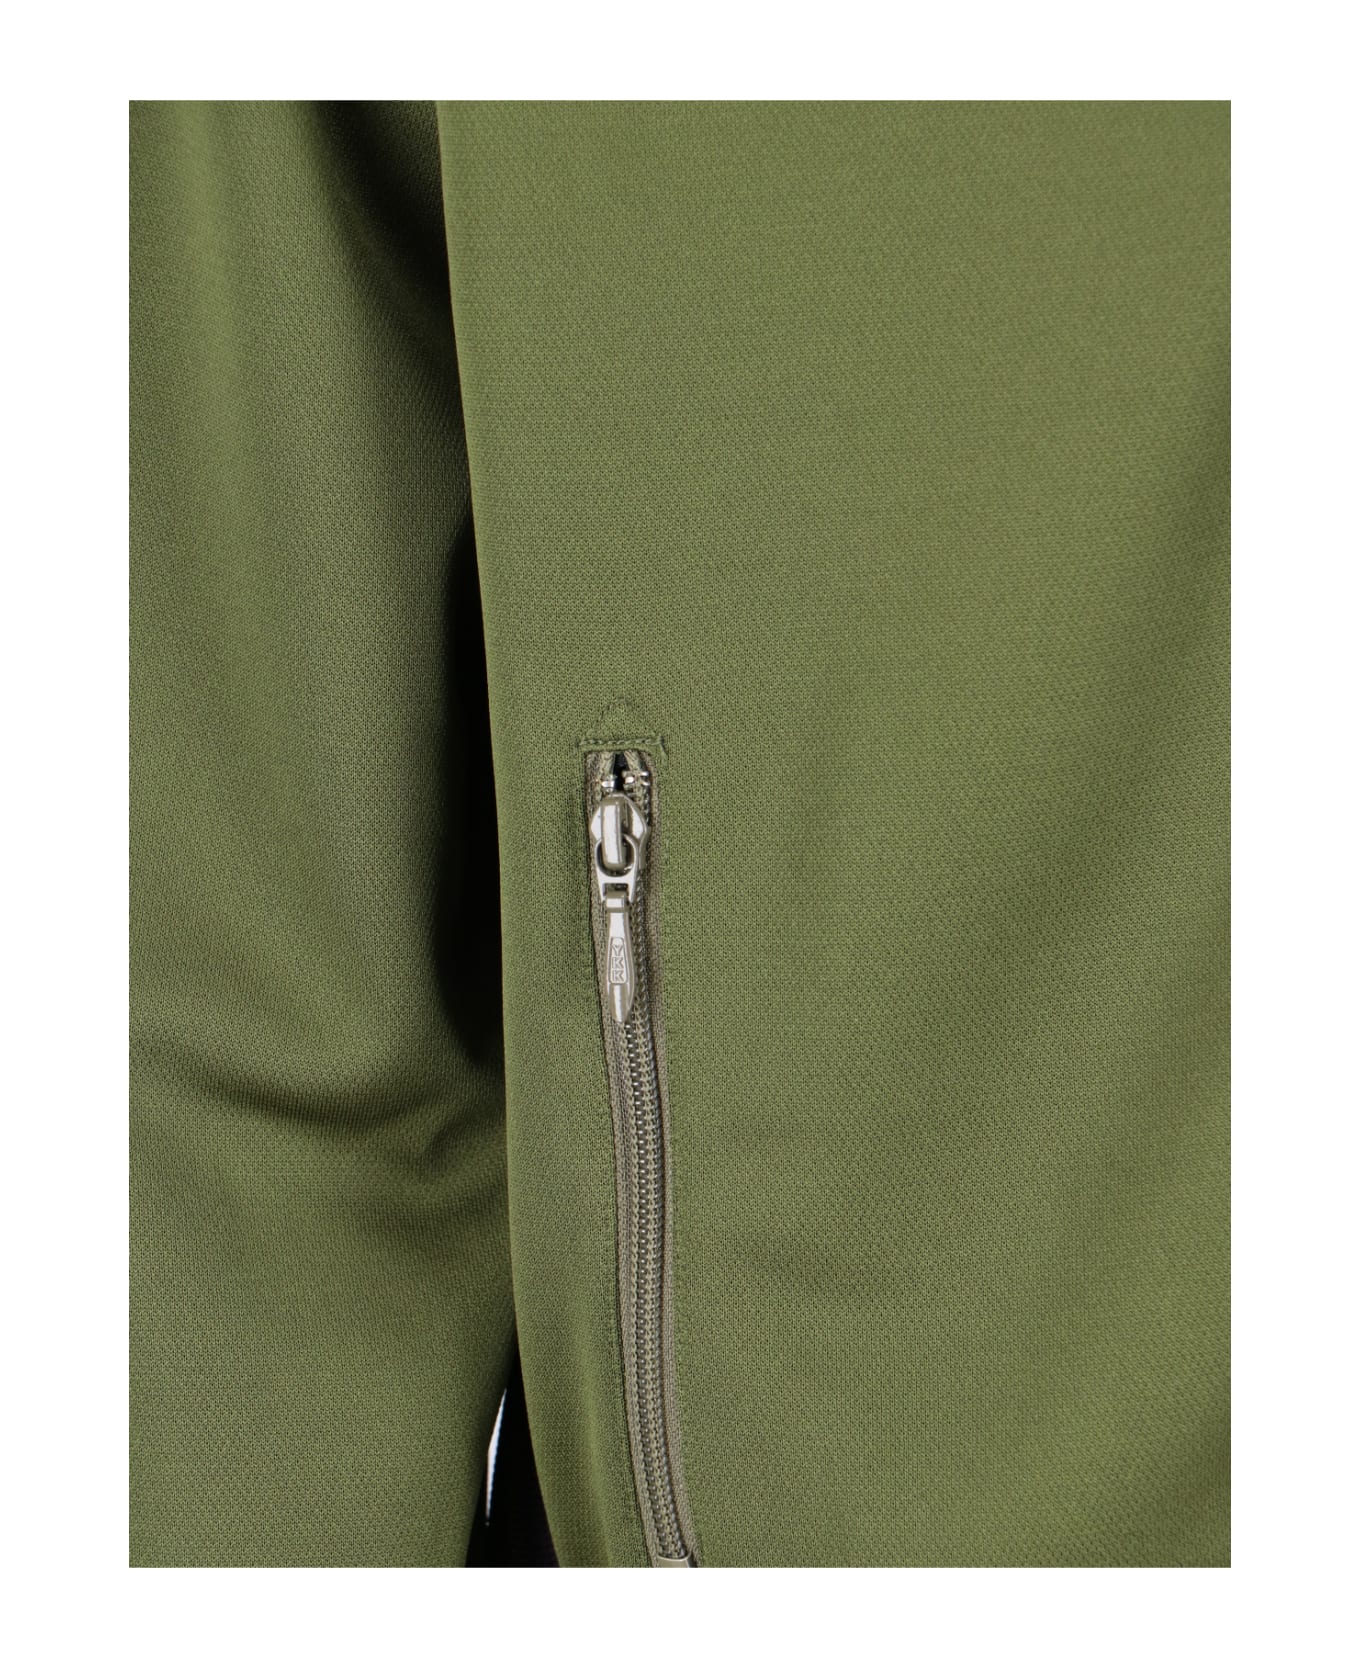 Needles 'olive' Turtleneck Sweatshirt - Green フリース